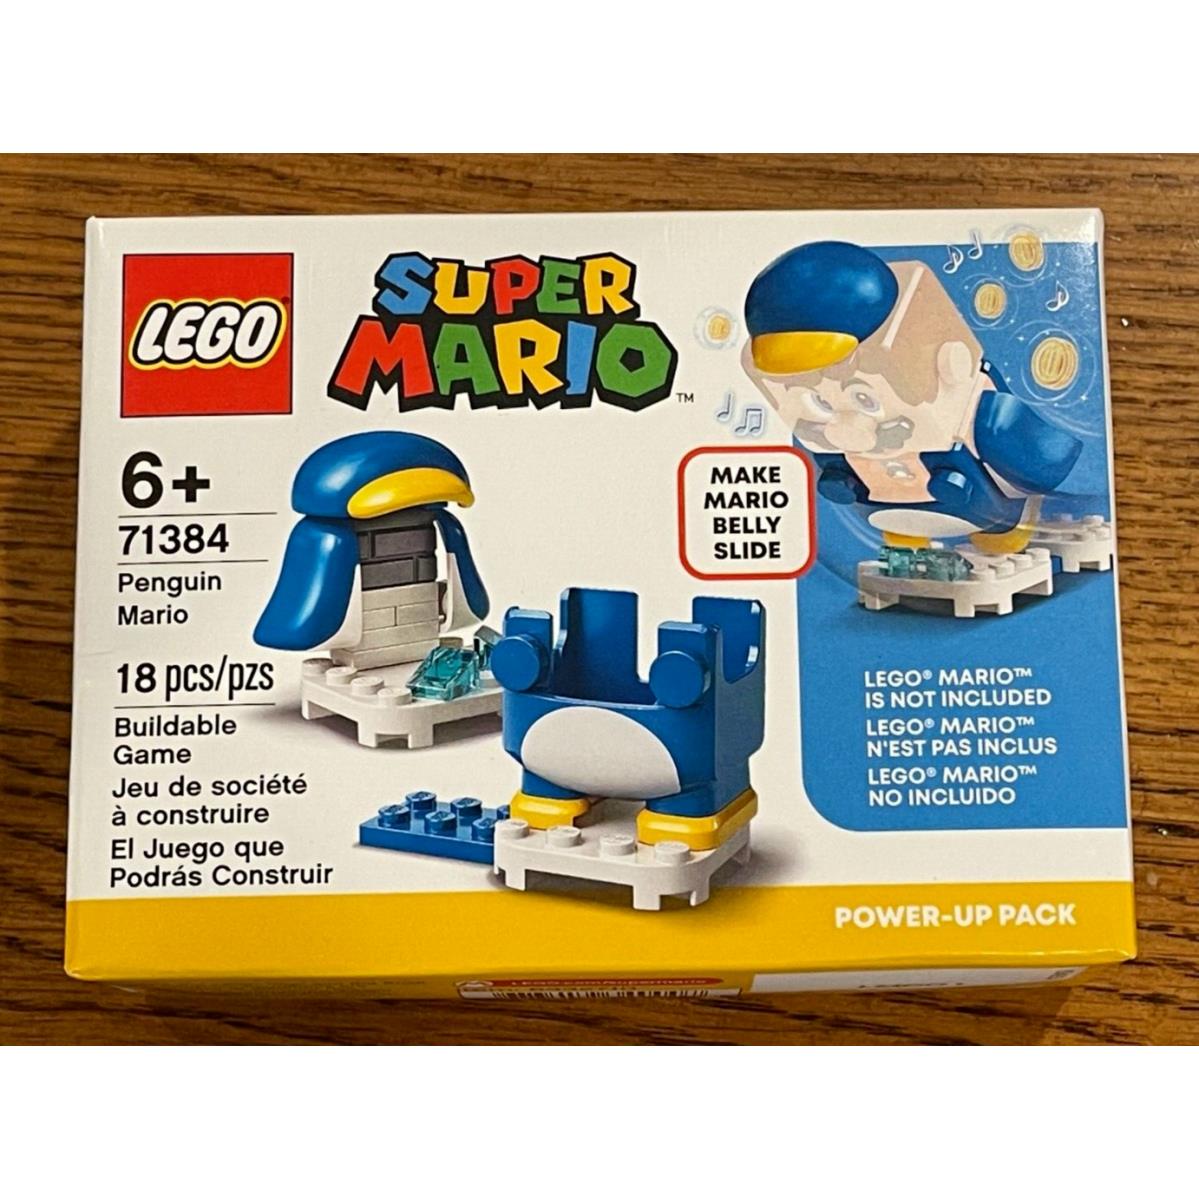 Lego Super Mario Penguin Mario Power-up Pack 71384 Building Kit 18 Pieces